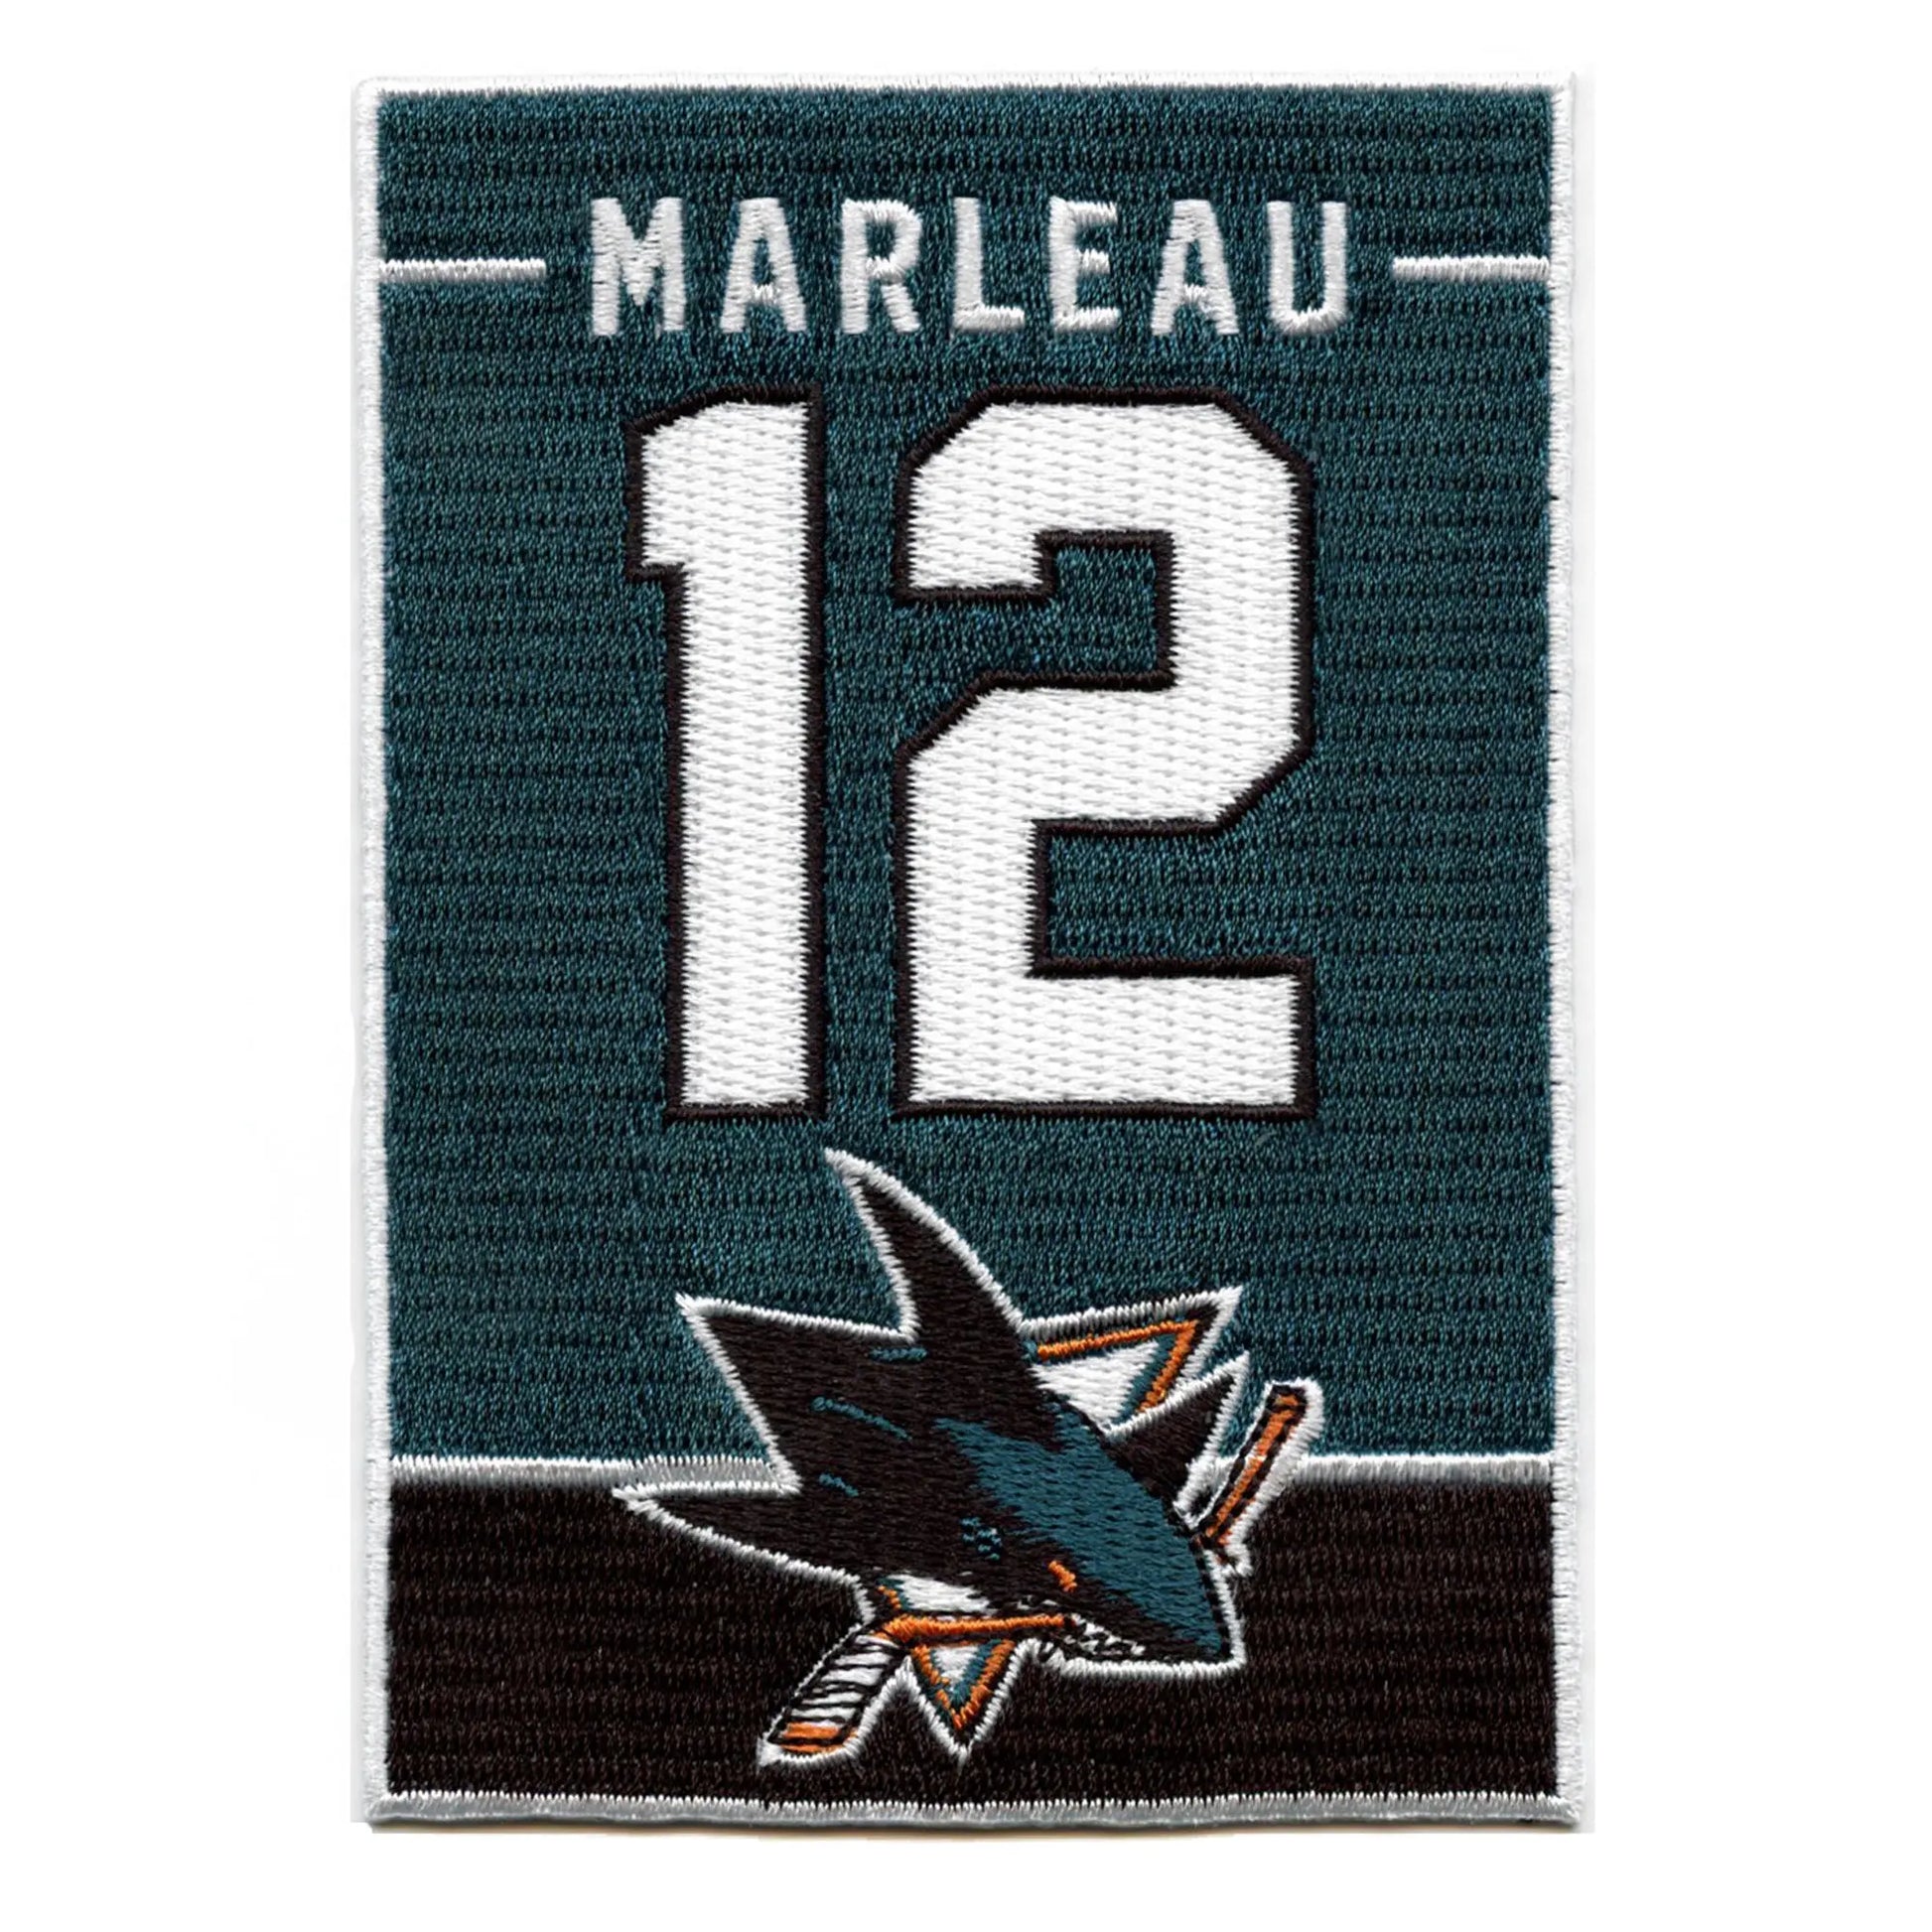 2023 San Jose Sharks Patrick Marleau #12 Retirement Banner Jersey Patch